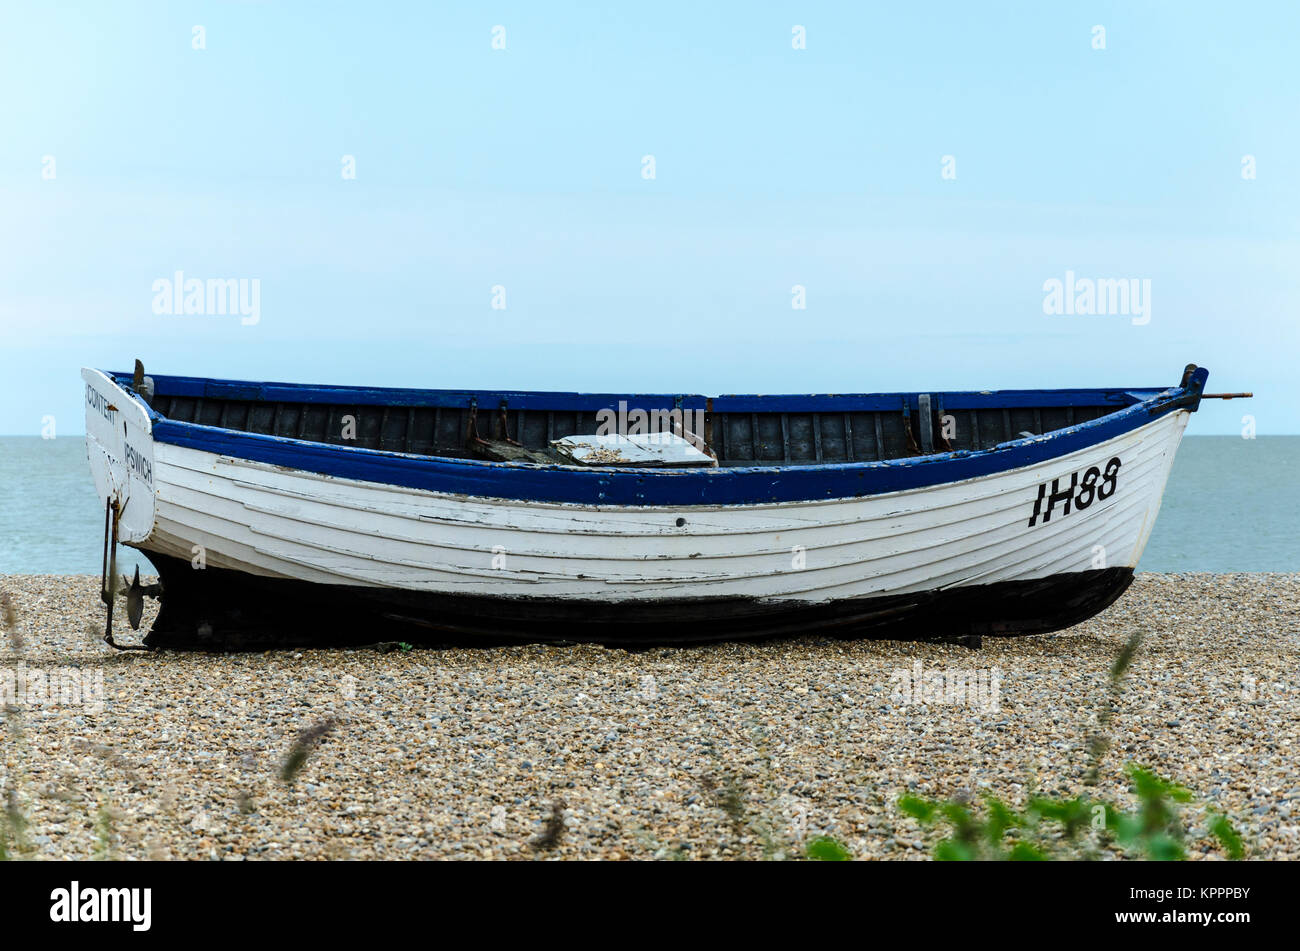 Small boat on Aldeburgh beach, Aldeburgh English coastal town in Suffolk, UK Stock Photo